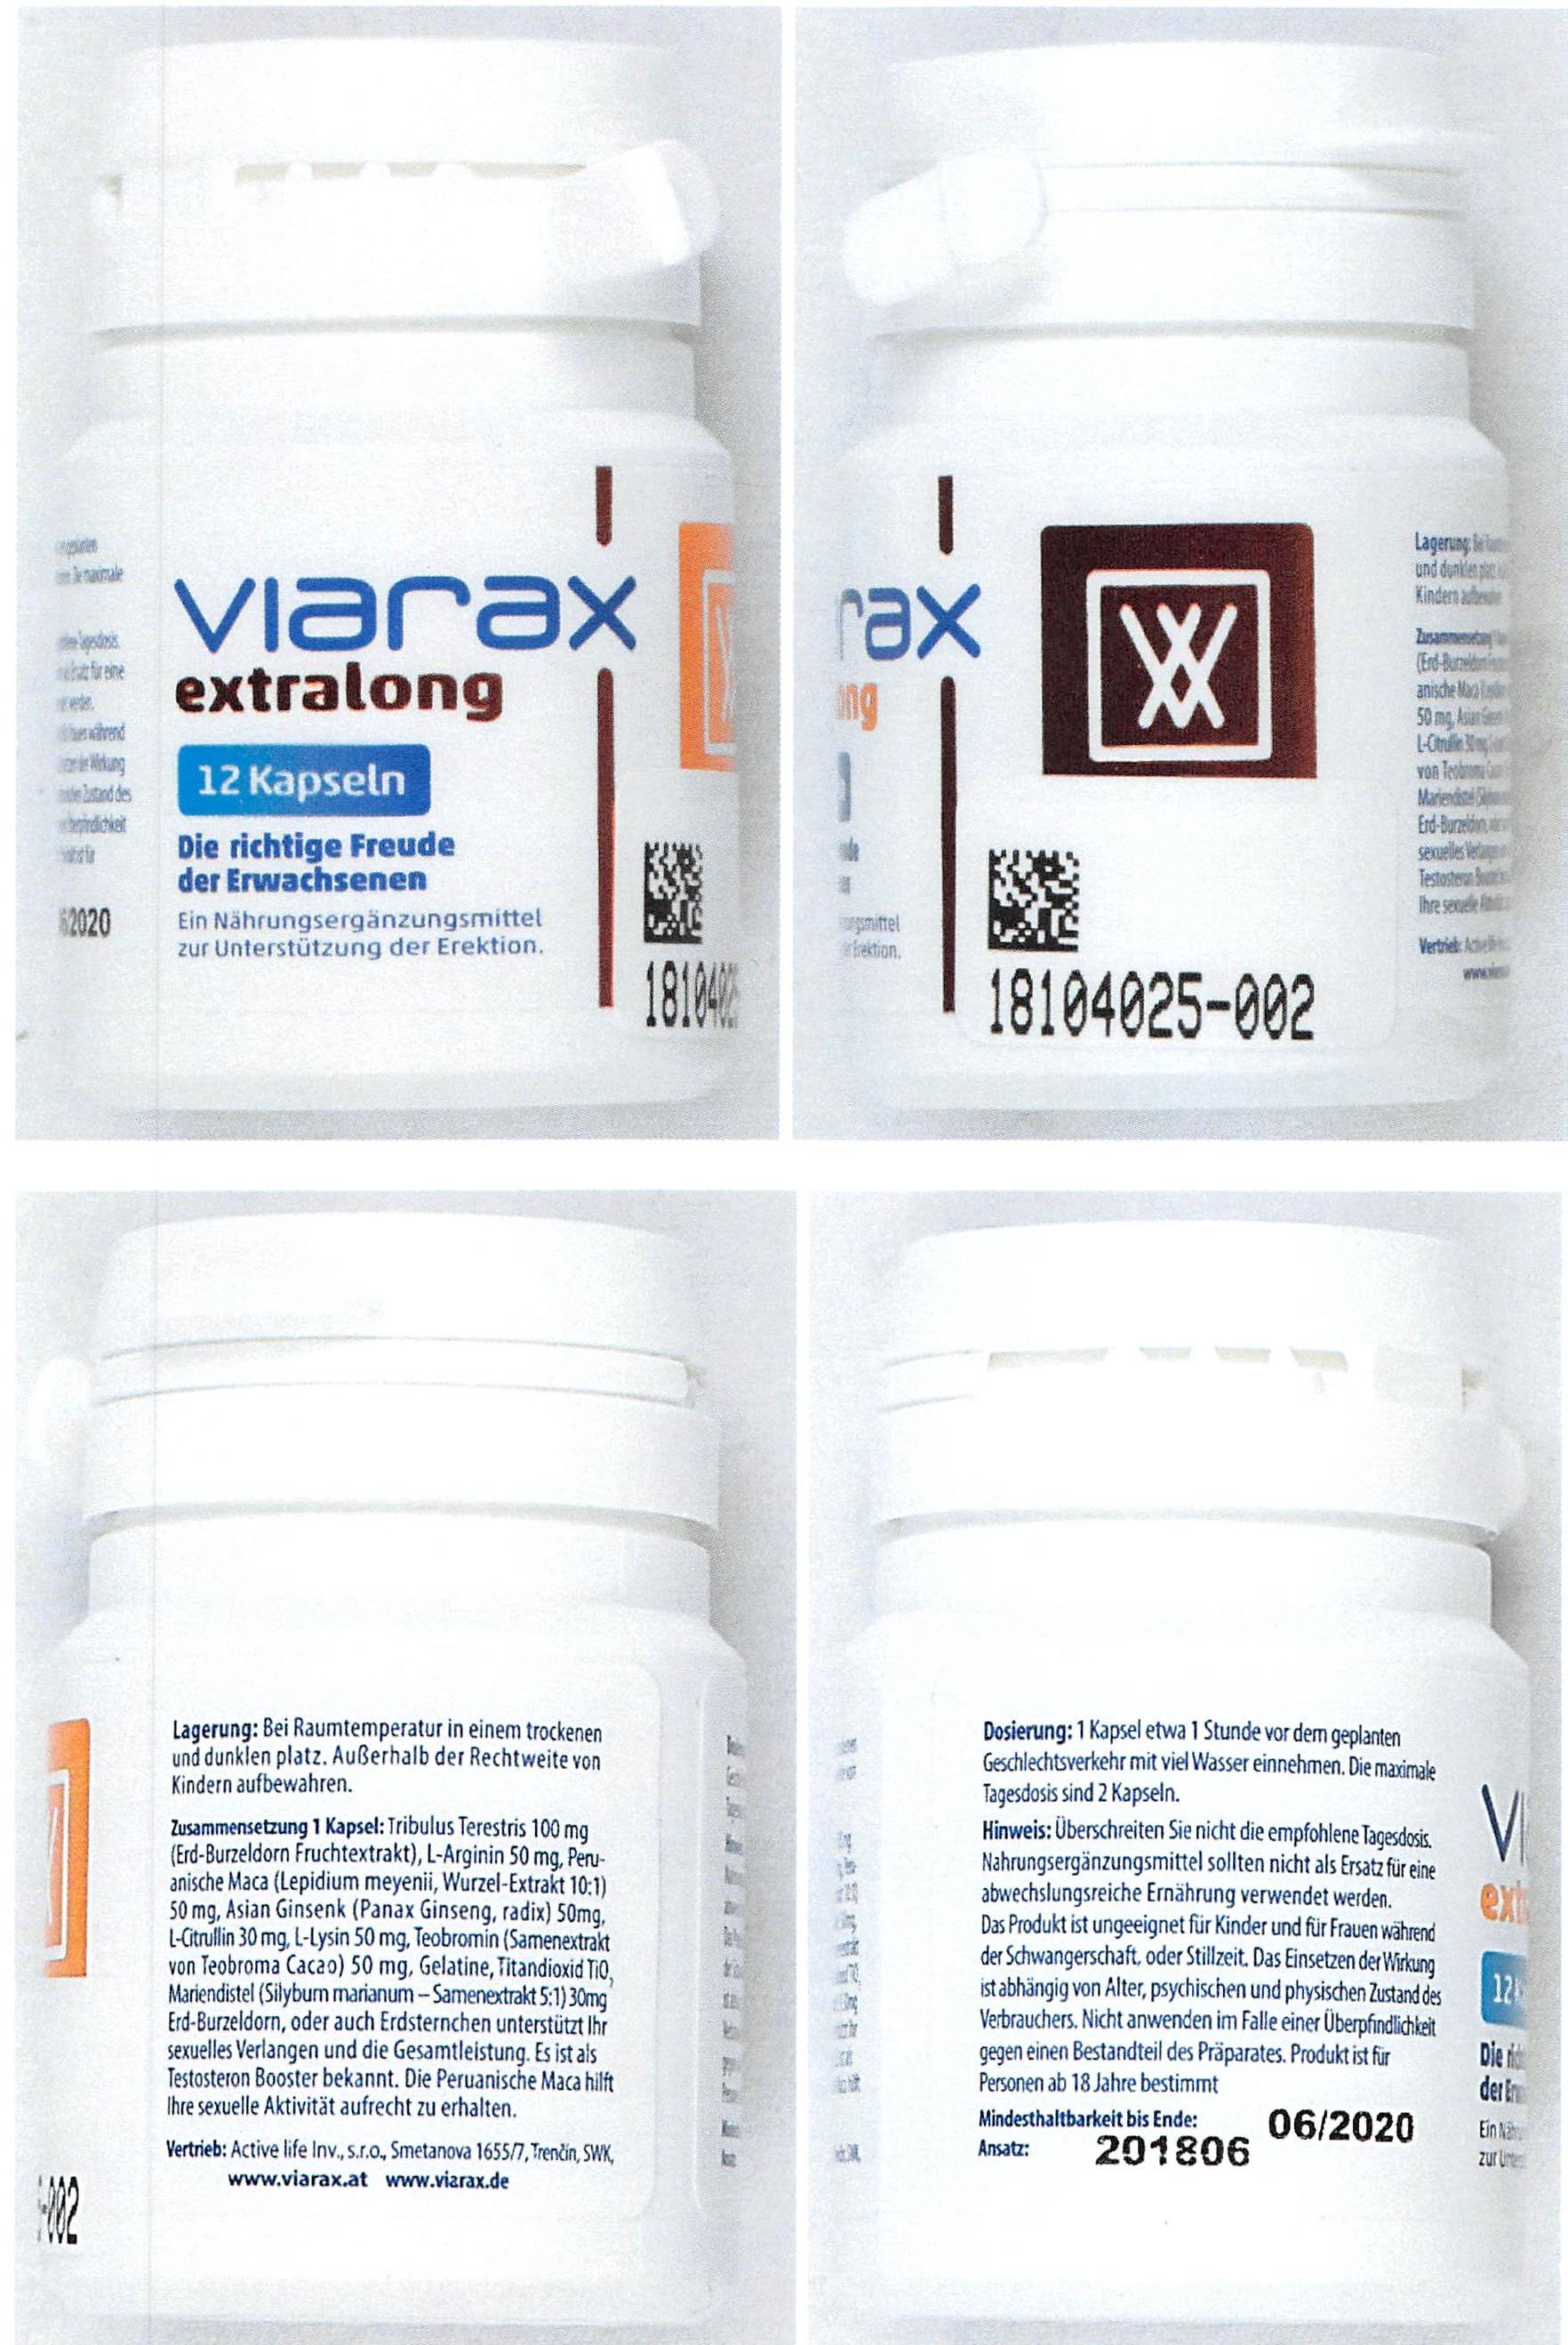 Viarax extralong - Illegales Potenzmittel (Illegal potency enhancer)